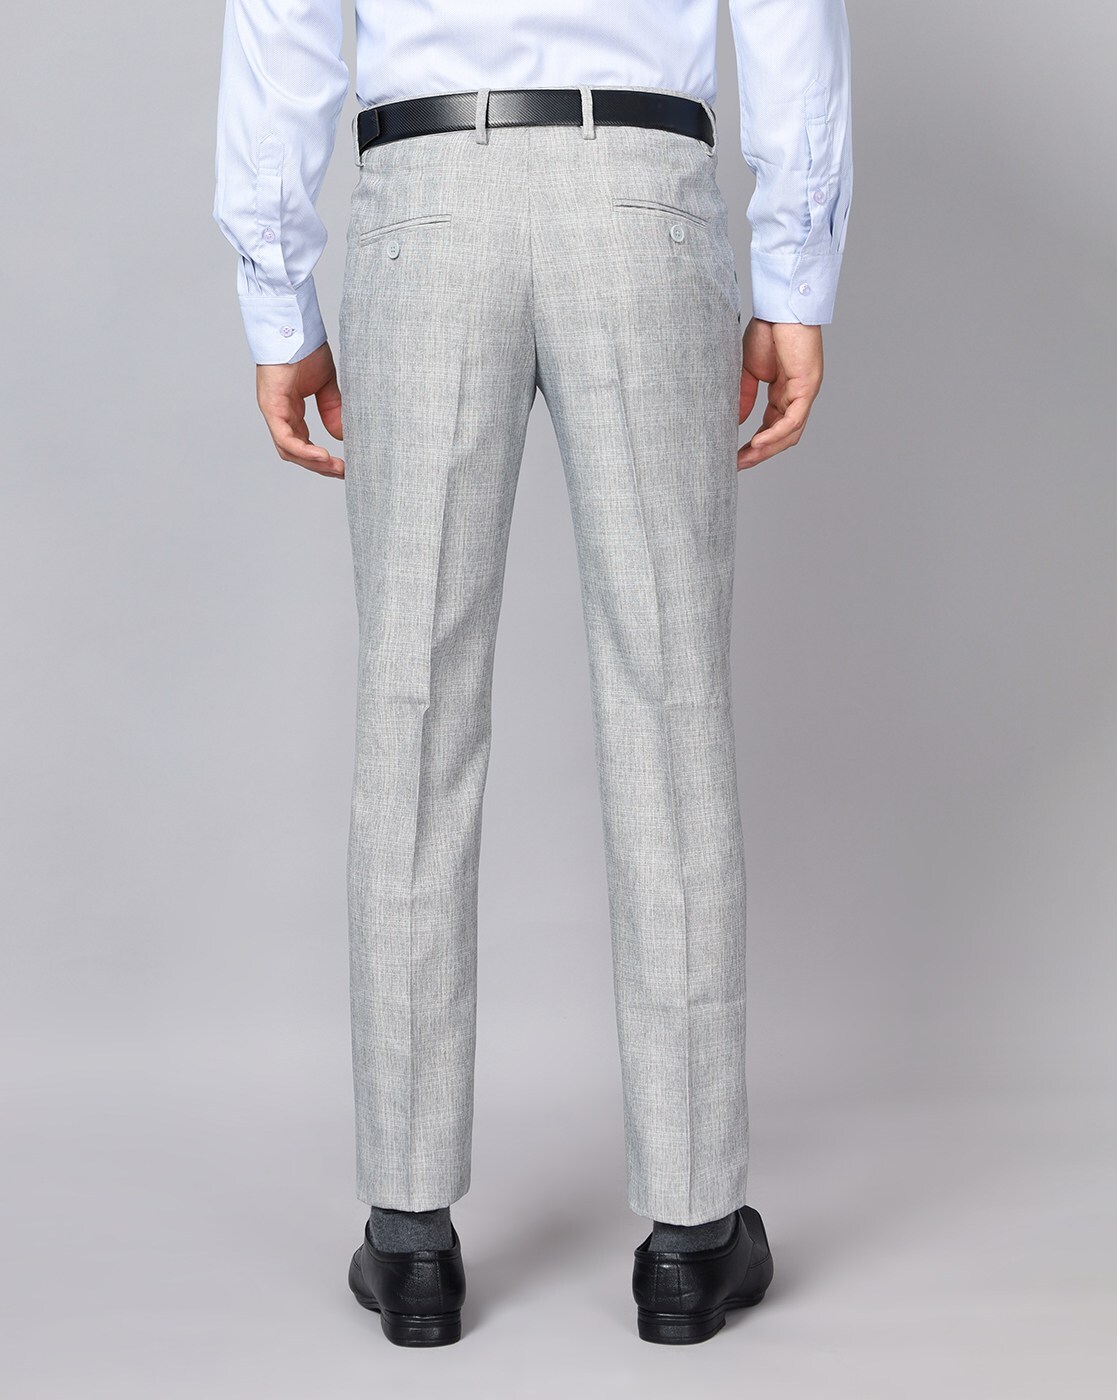 Buy Men Grey Check Slim Fit Formal Trousers Online  782922  Peter England